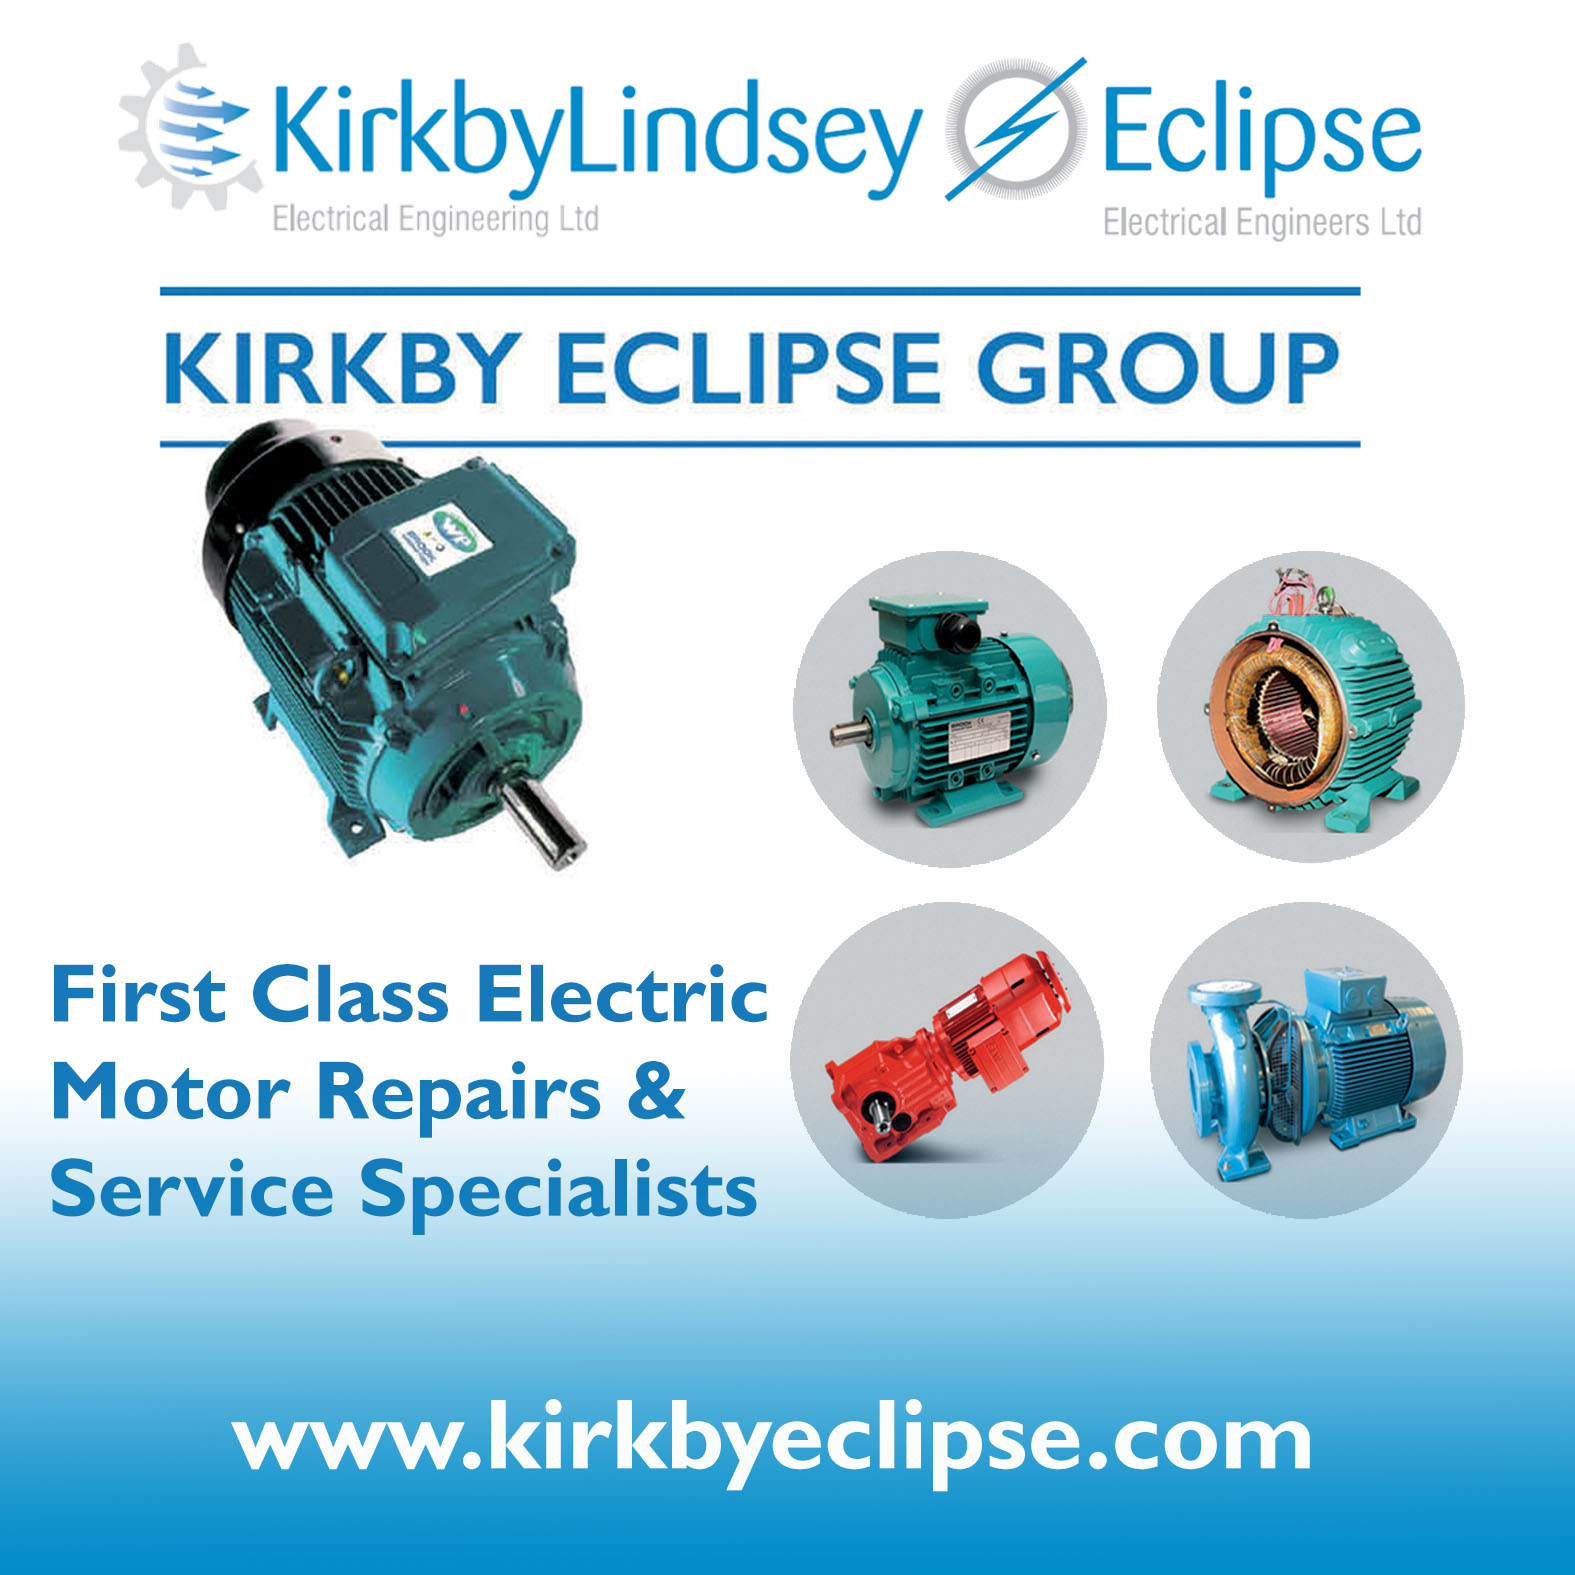 Kirkby Lindsey Electrical Engineering Ltd